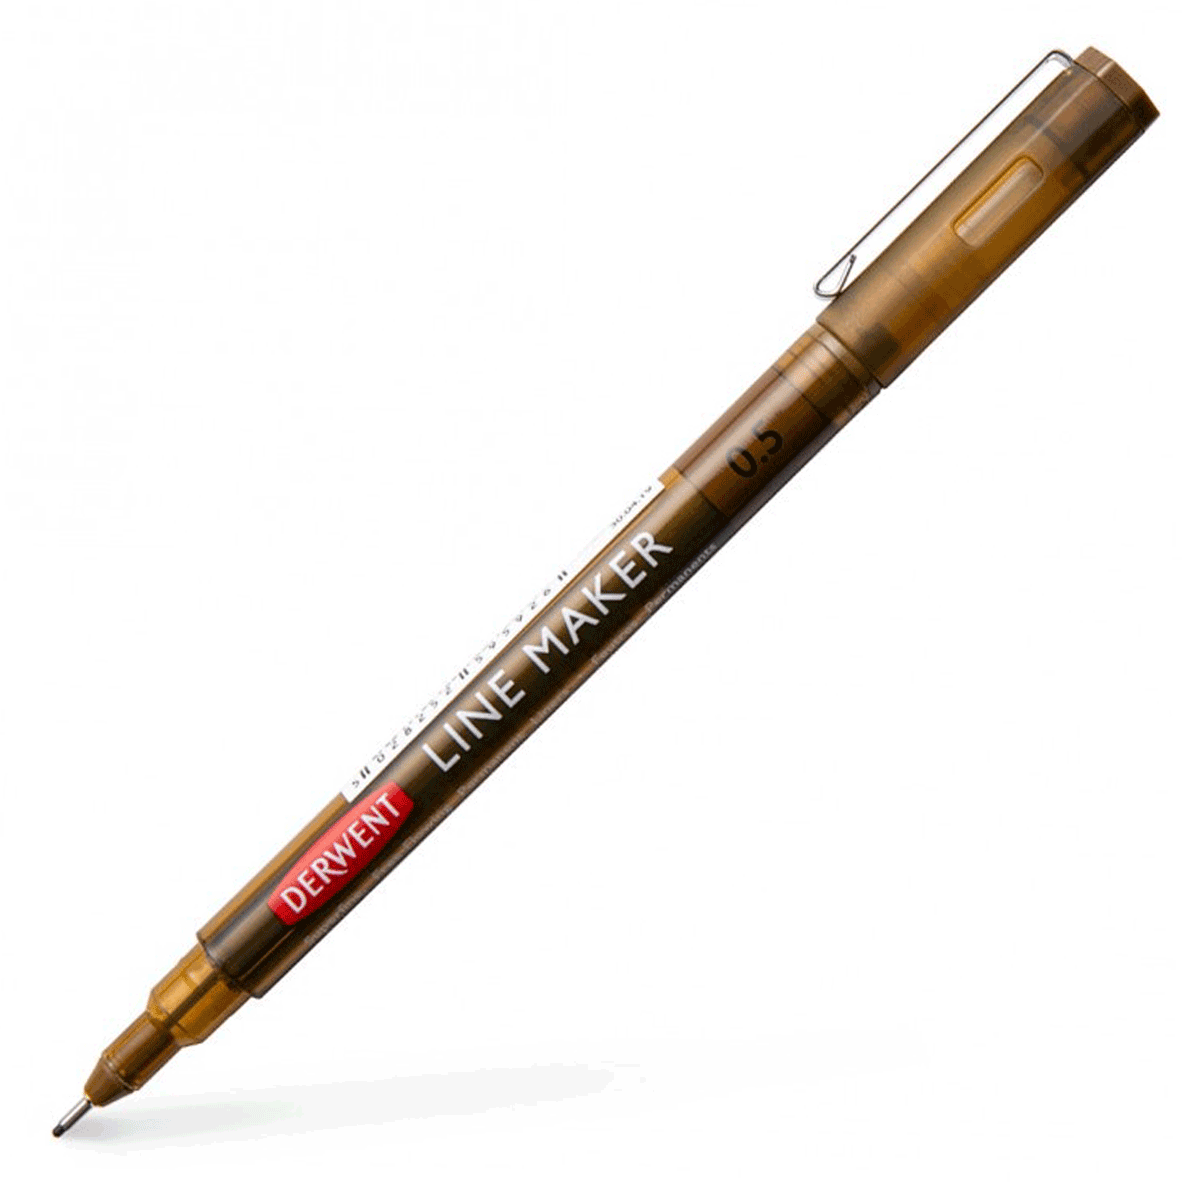 Derwent Graphik Line Marker Pen - Sepia 0.5